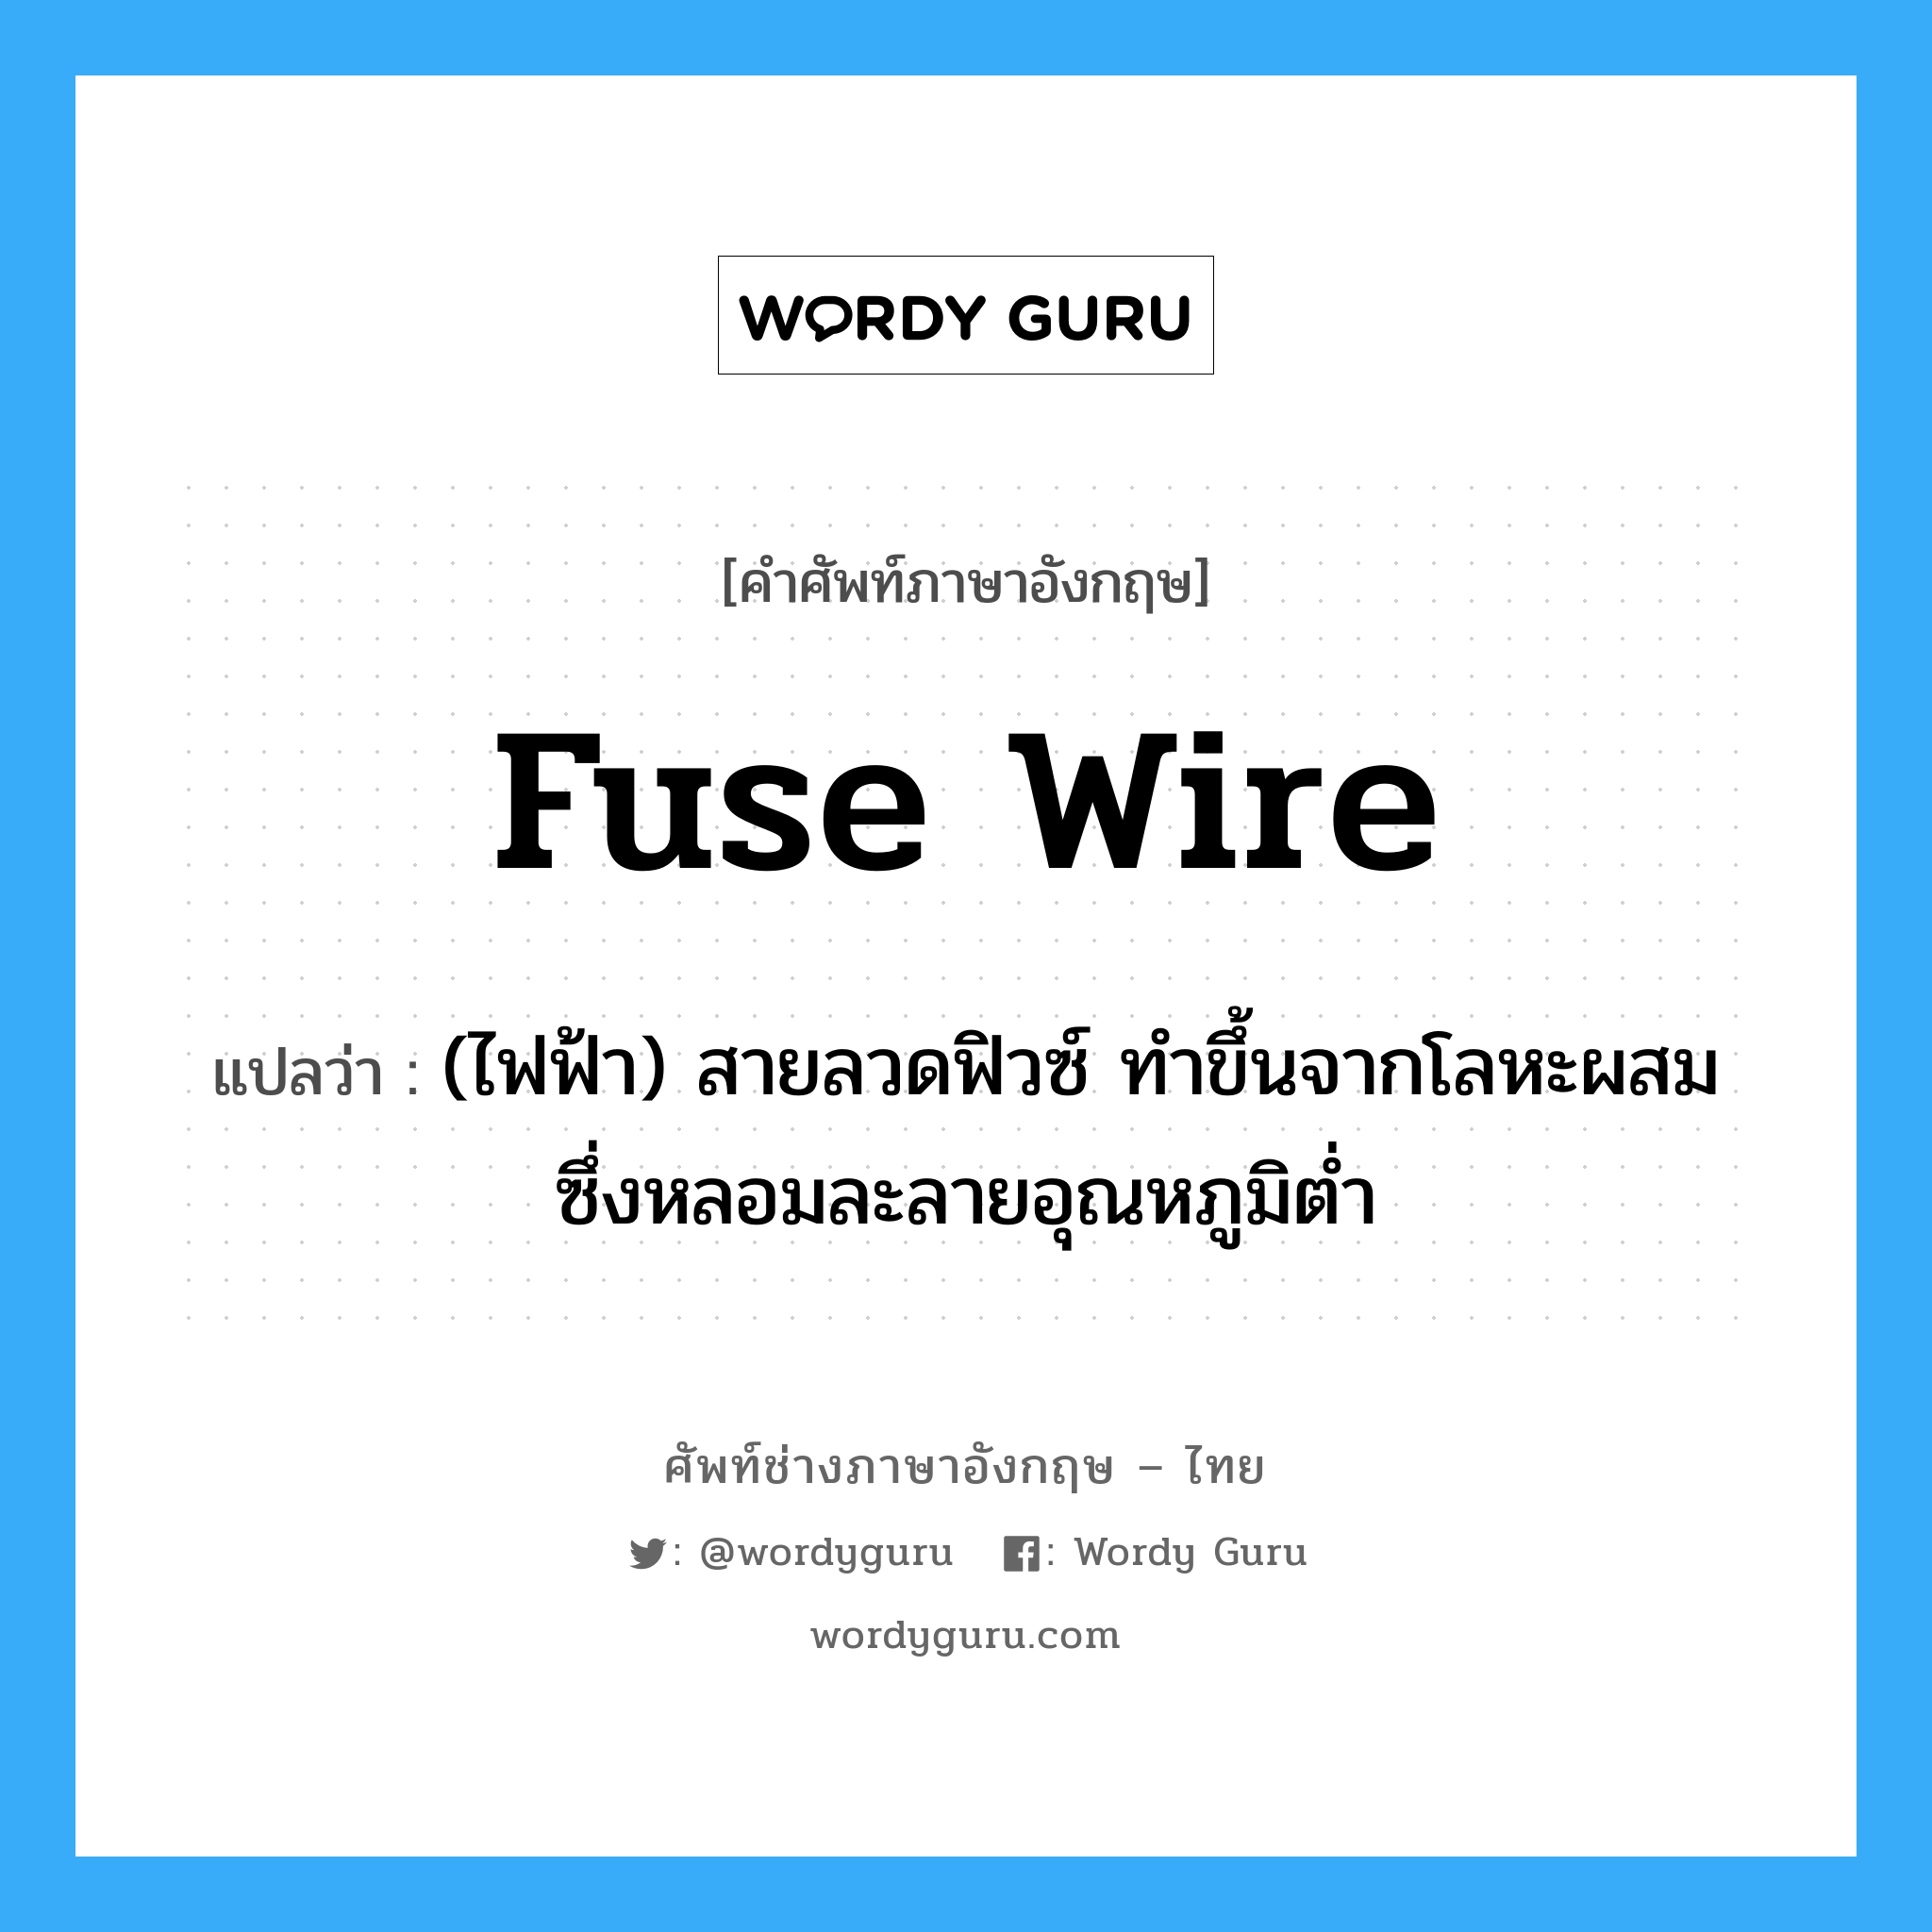 fuse wire แปลว่า?, คำศัพท์ช่างภาษาอังกฤษ - ไทย fuse wire คำศัพท์ภาษาอังกฤษ fuse wire แปลว่า (ไฟฟ้า) สายลวดฟิวซ์ ทำขึ้นจากโลหะผสม ซึ่งหลอมละลายอุณหภูมิต่ำ